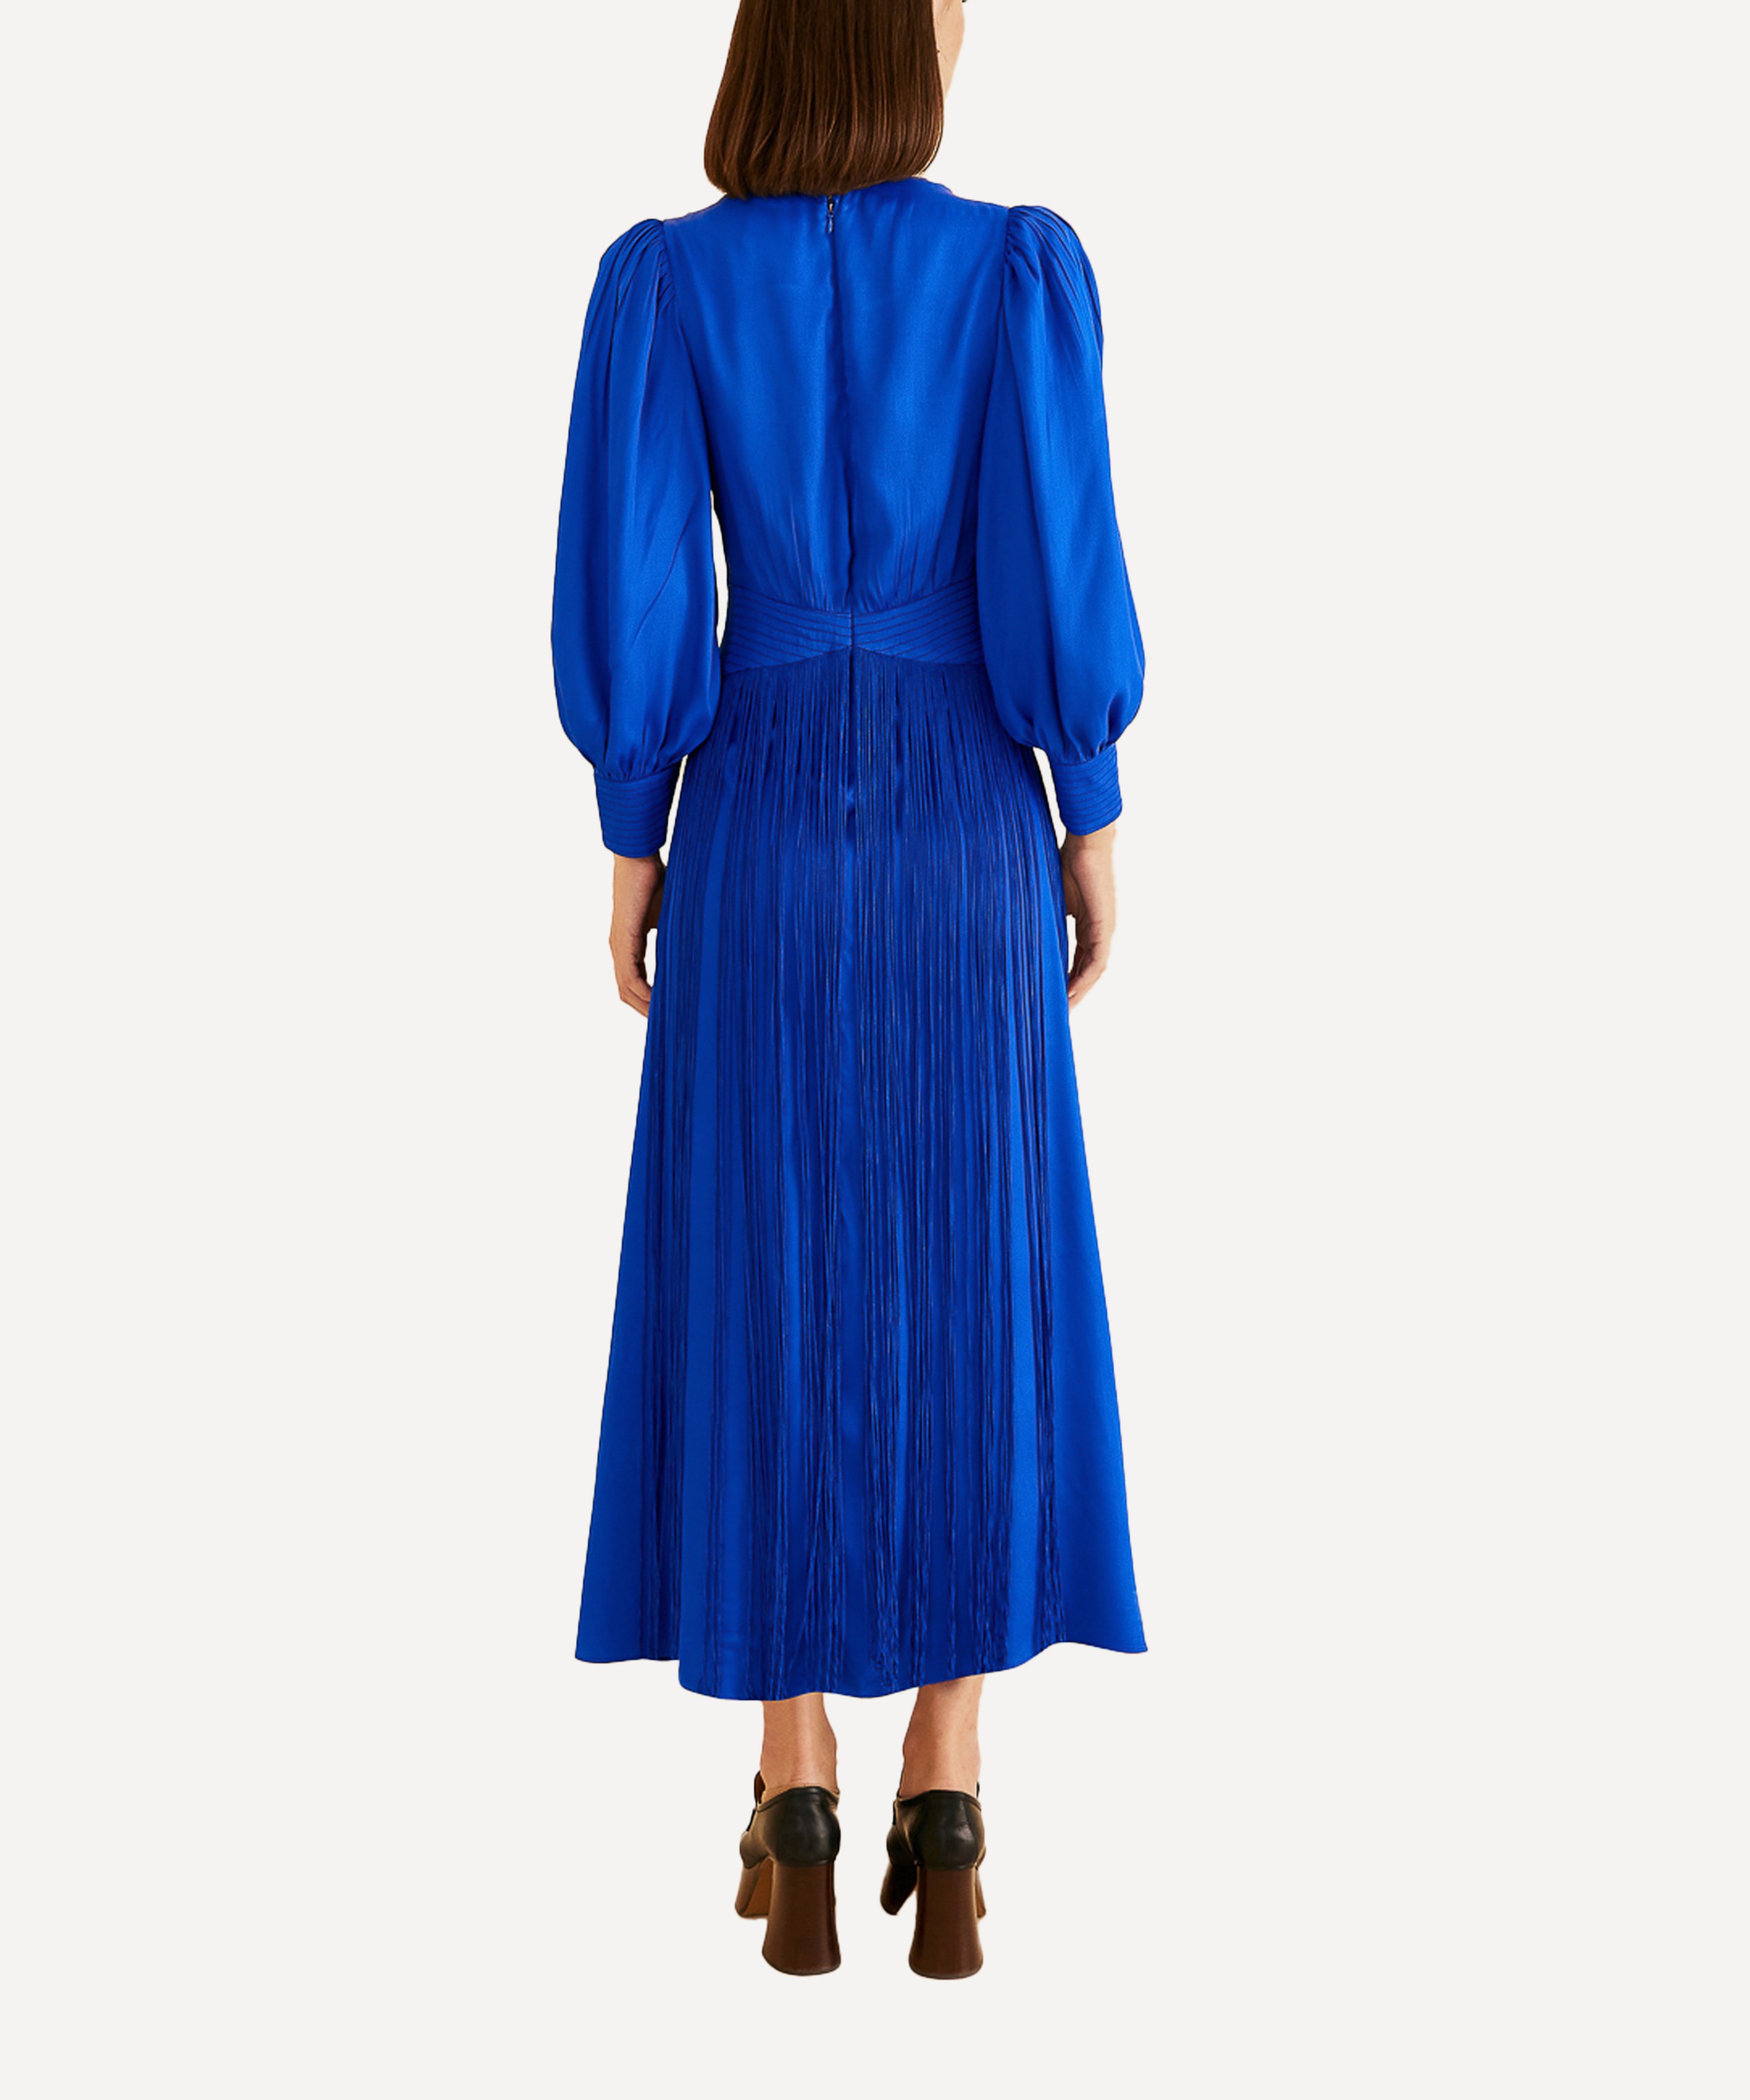 FARM Rio - Bright Blue Fringes Maxi-Dress image number 2